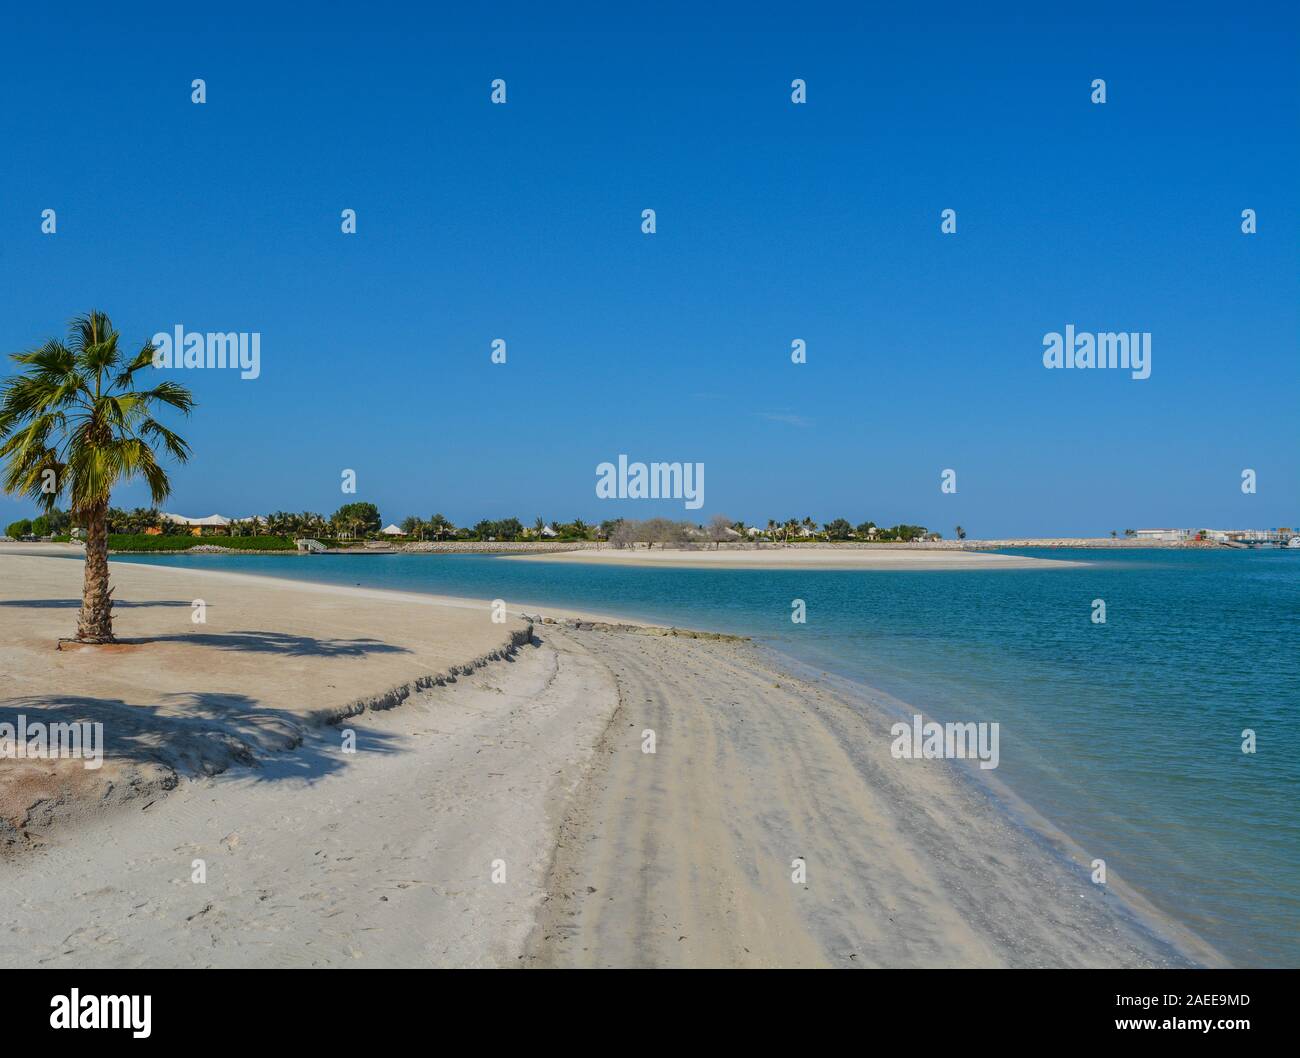 Al Hamra Beach on the Arabian Gulf at Ras Al Khaimah, United Arab Emirates, Southwest Asia. Stock Photo